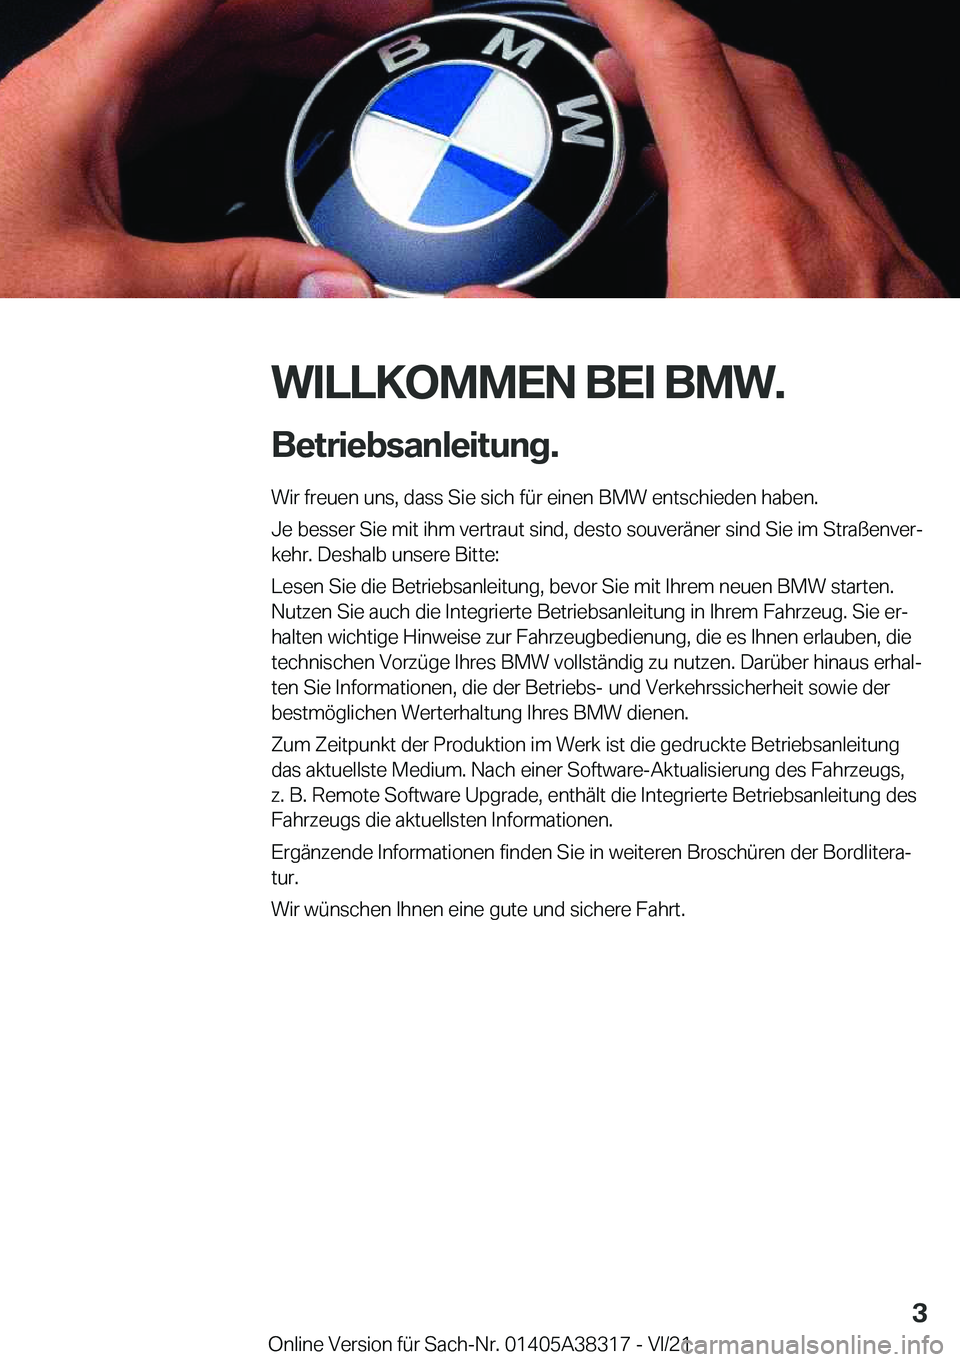 BMW 2 SERIES GRAN COUPE 2022  Betriebsanleitungen (in German) �W�I�L�L�K�O�M�M�E�N��B�E�I��B�M�W�.�B�e�t�r�i�e�b�s�a�n�l�e�i�t�u�n�g�. �W�i�r��f�r�e�u�e�n��u�n�s�,��d�a�s�s��S�i�e��s�i�c�h��f�